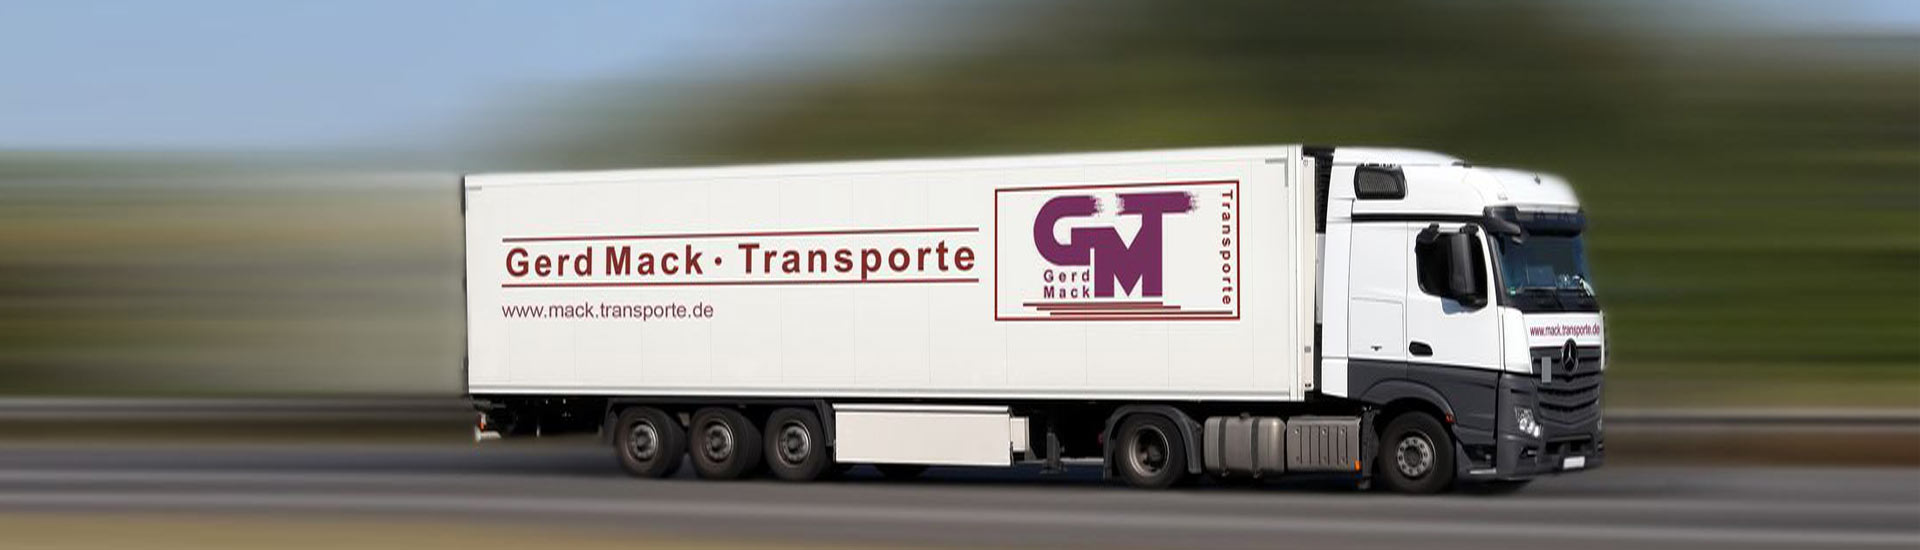 Gerd-Mack-Transporte